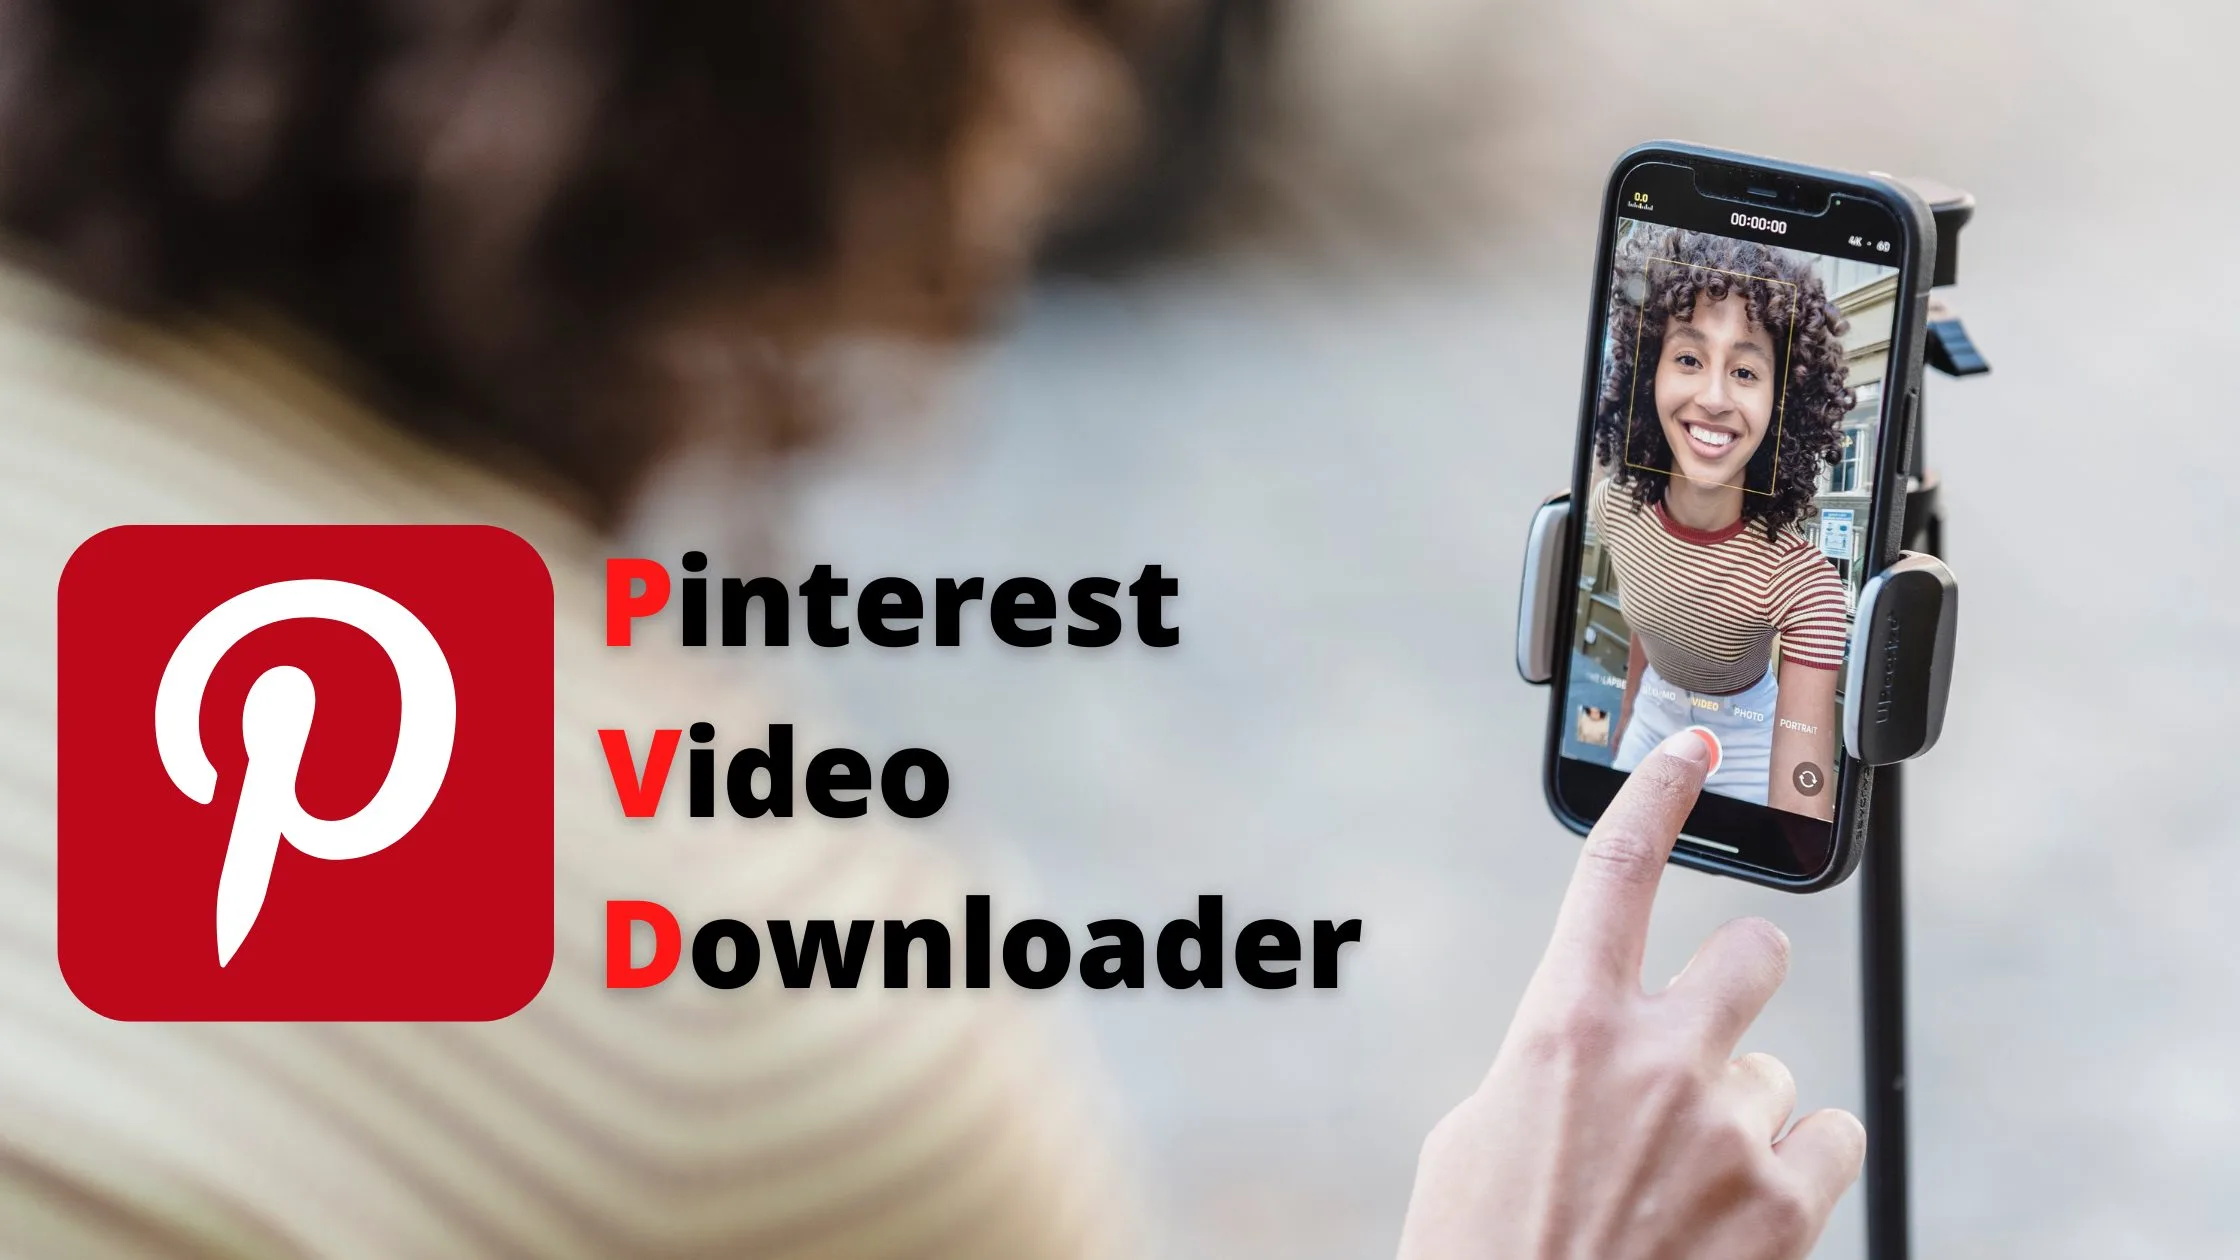 Pinterest video downloader